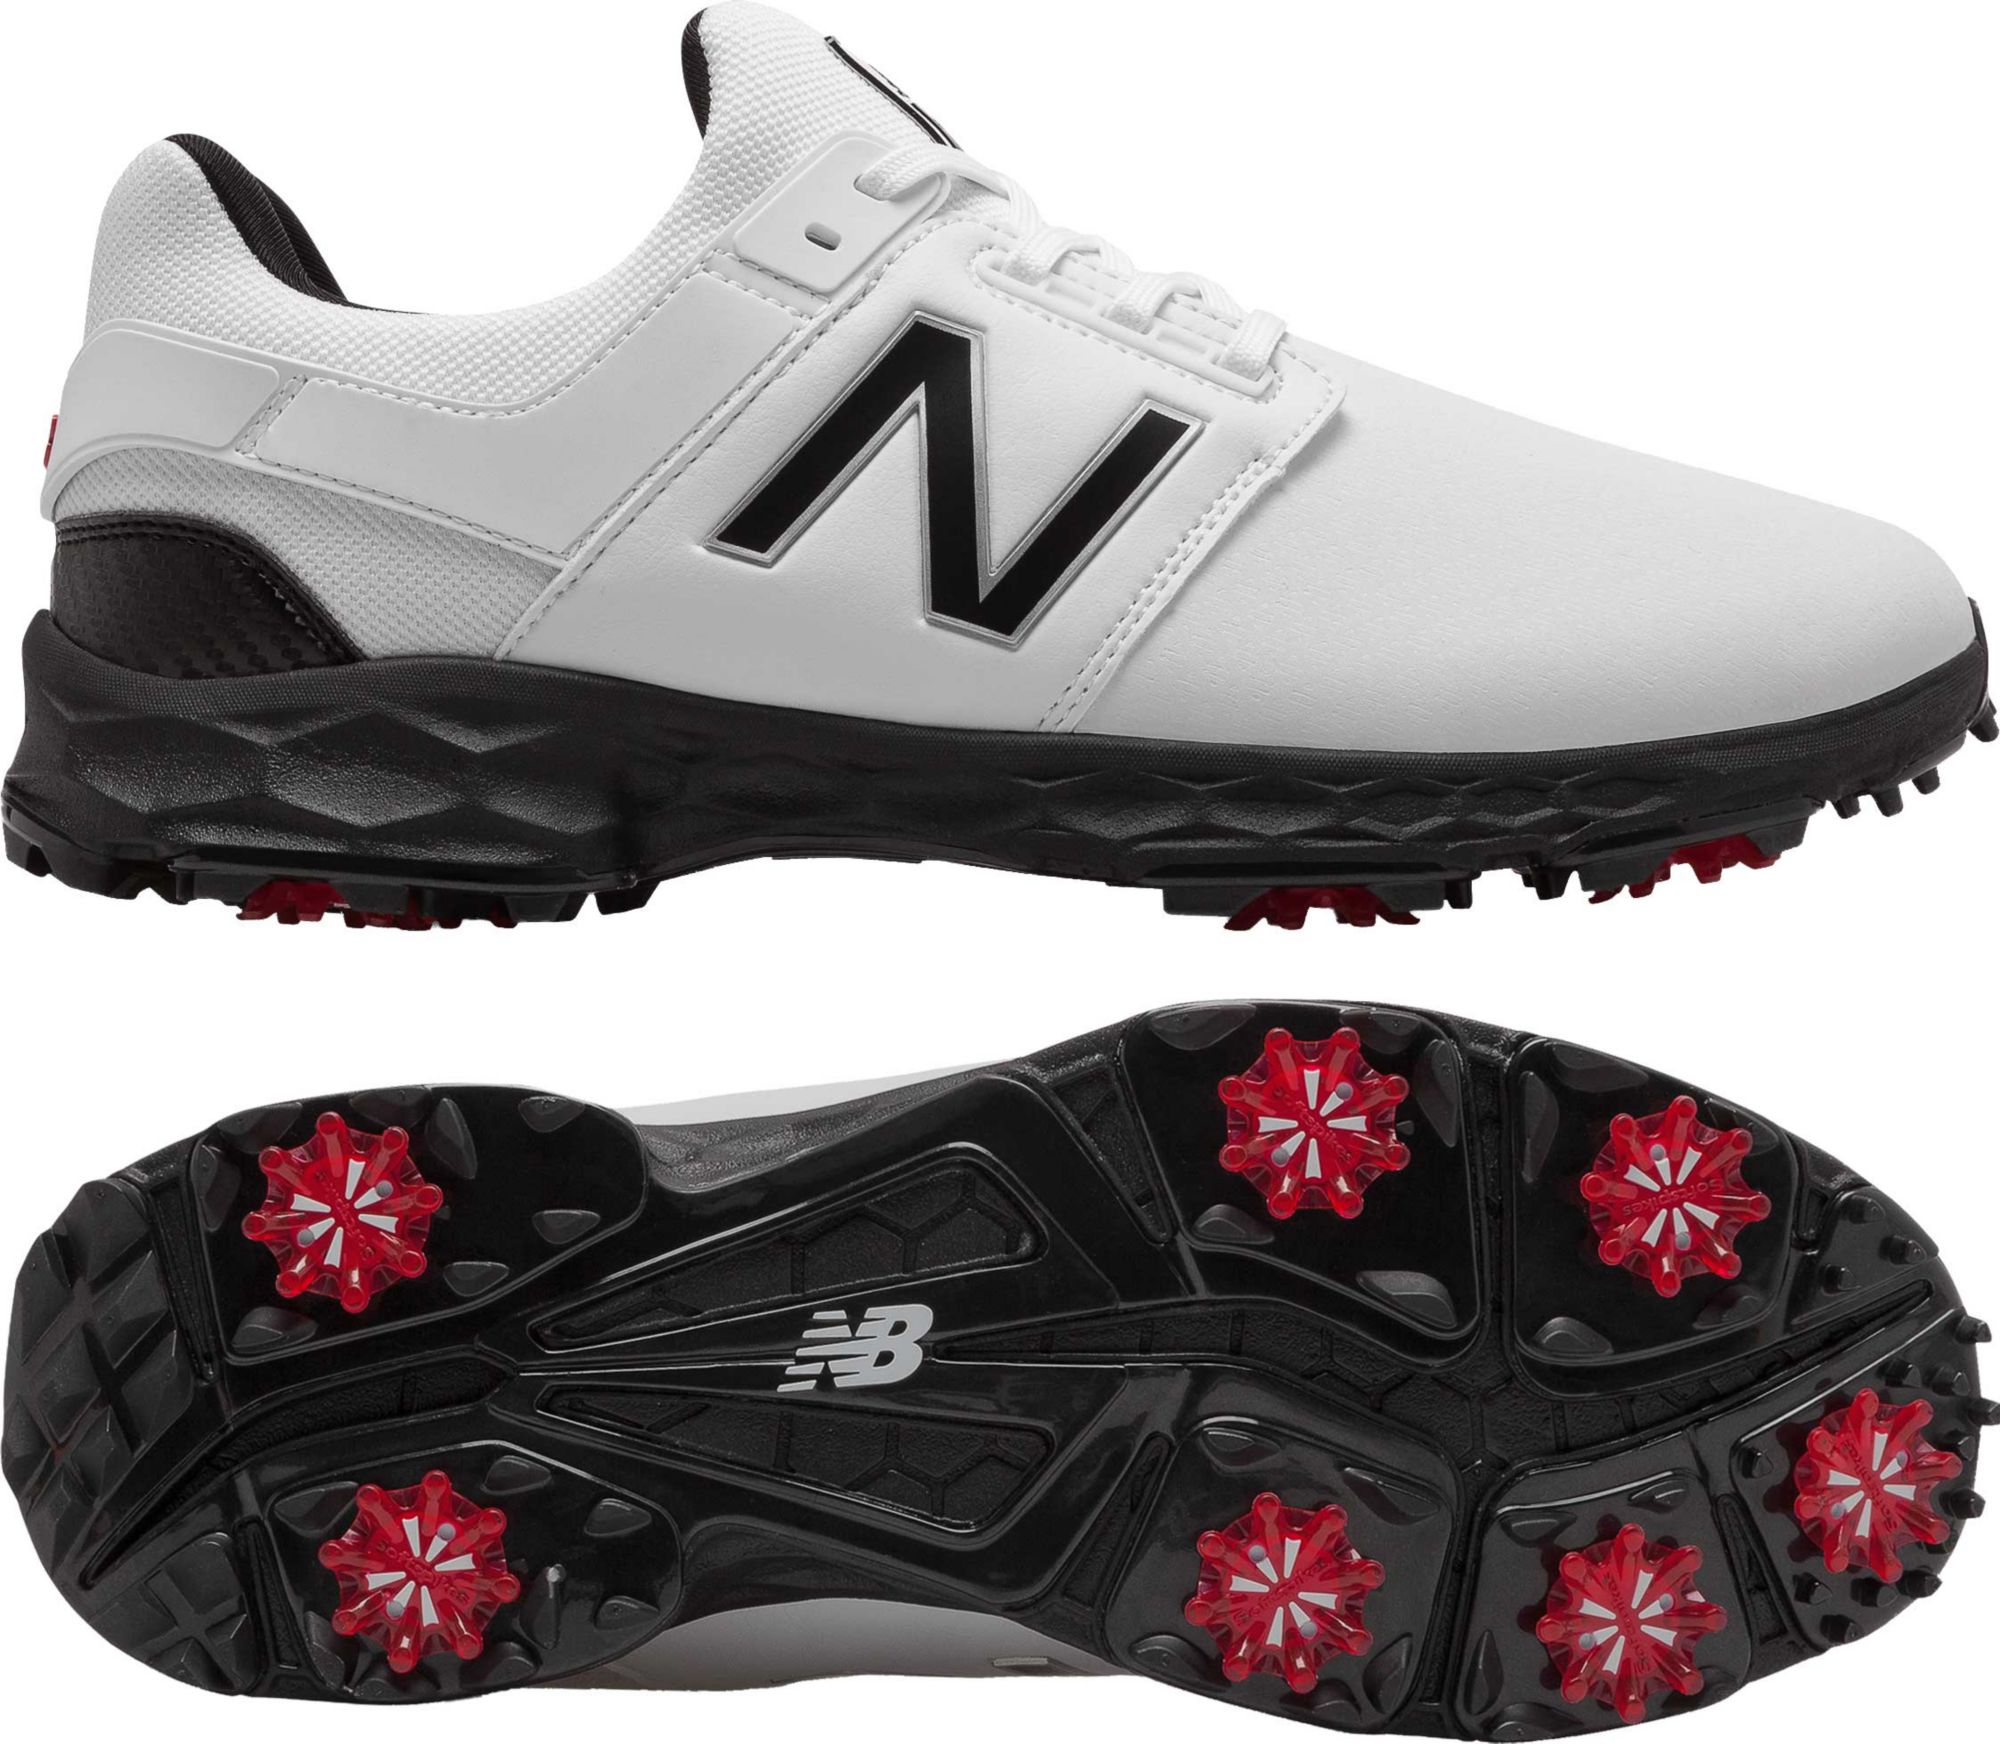 new balance men's golf shoes